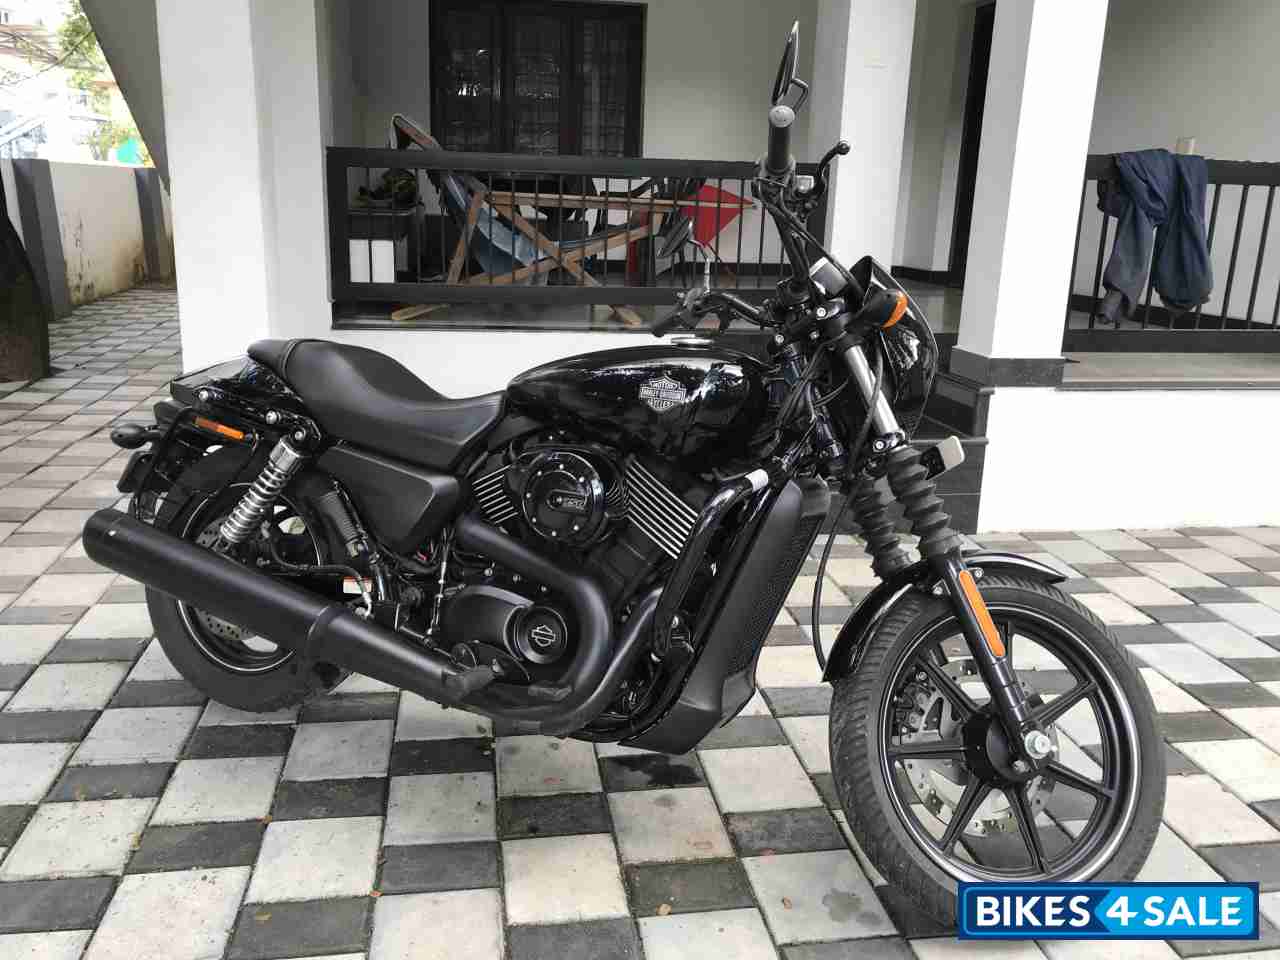 Harley Davidson Street 500 Price In Kerala Promotion Off54